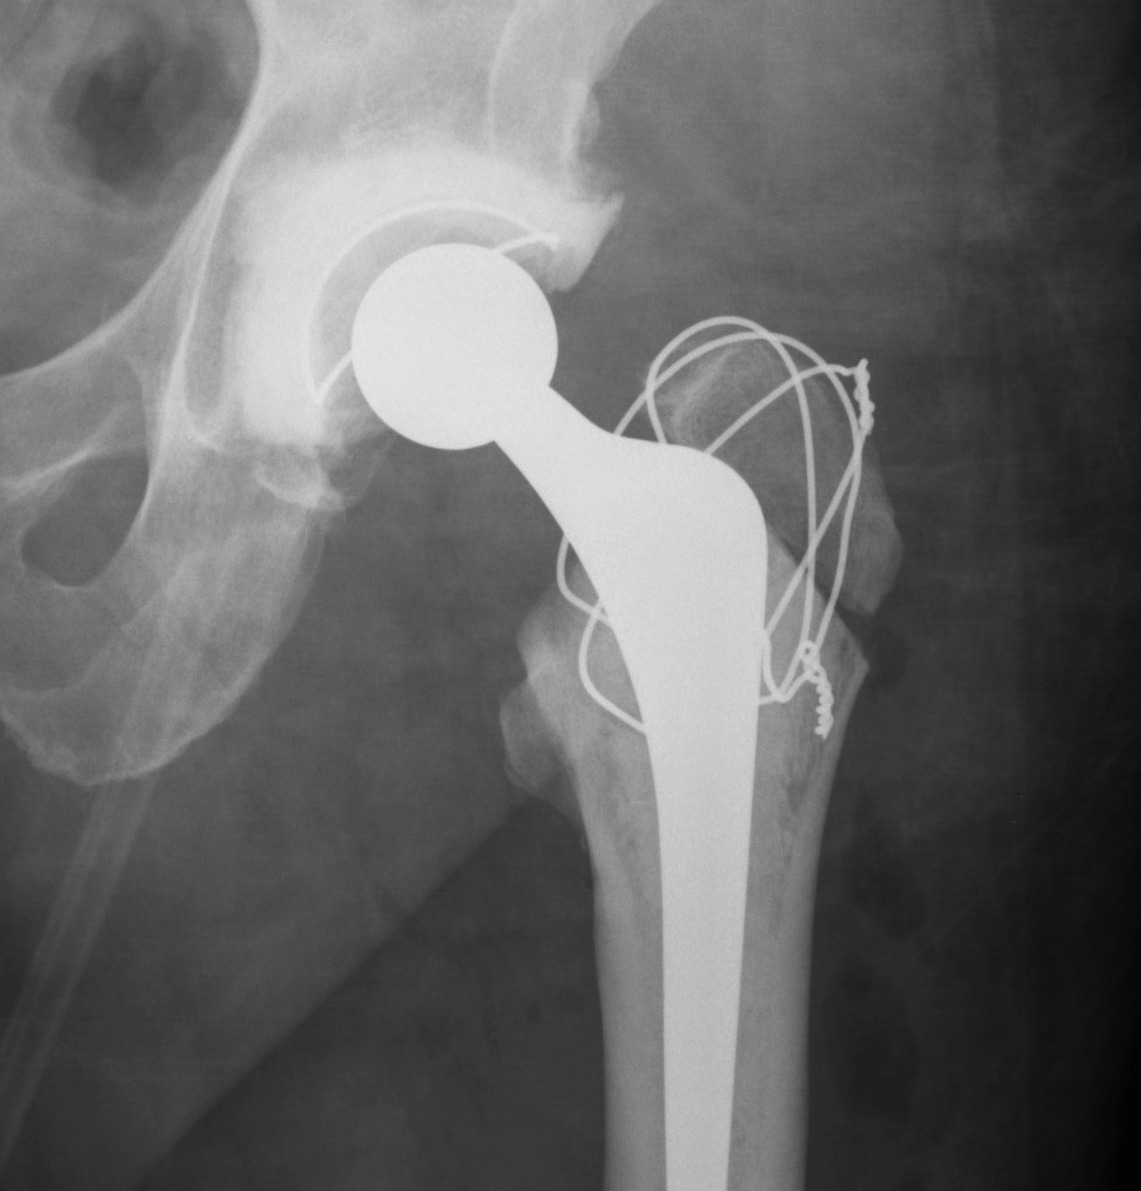 Standard GT Osteotomy Wire Fixation